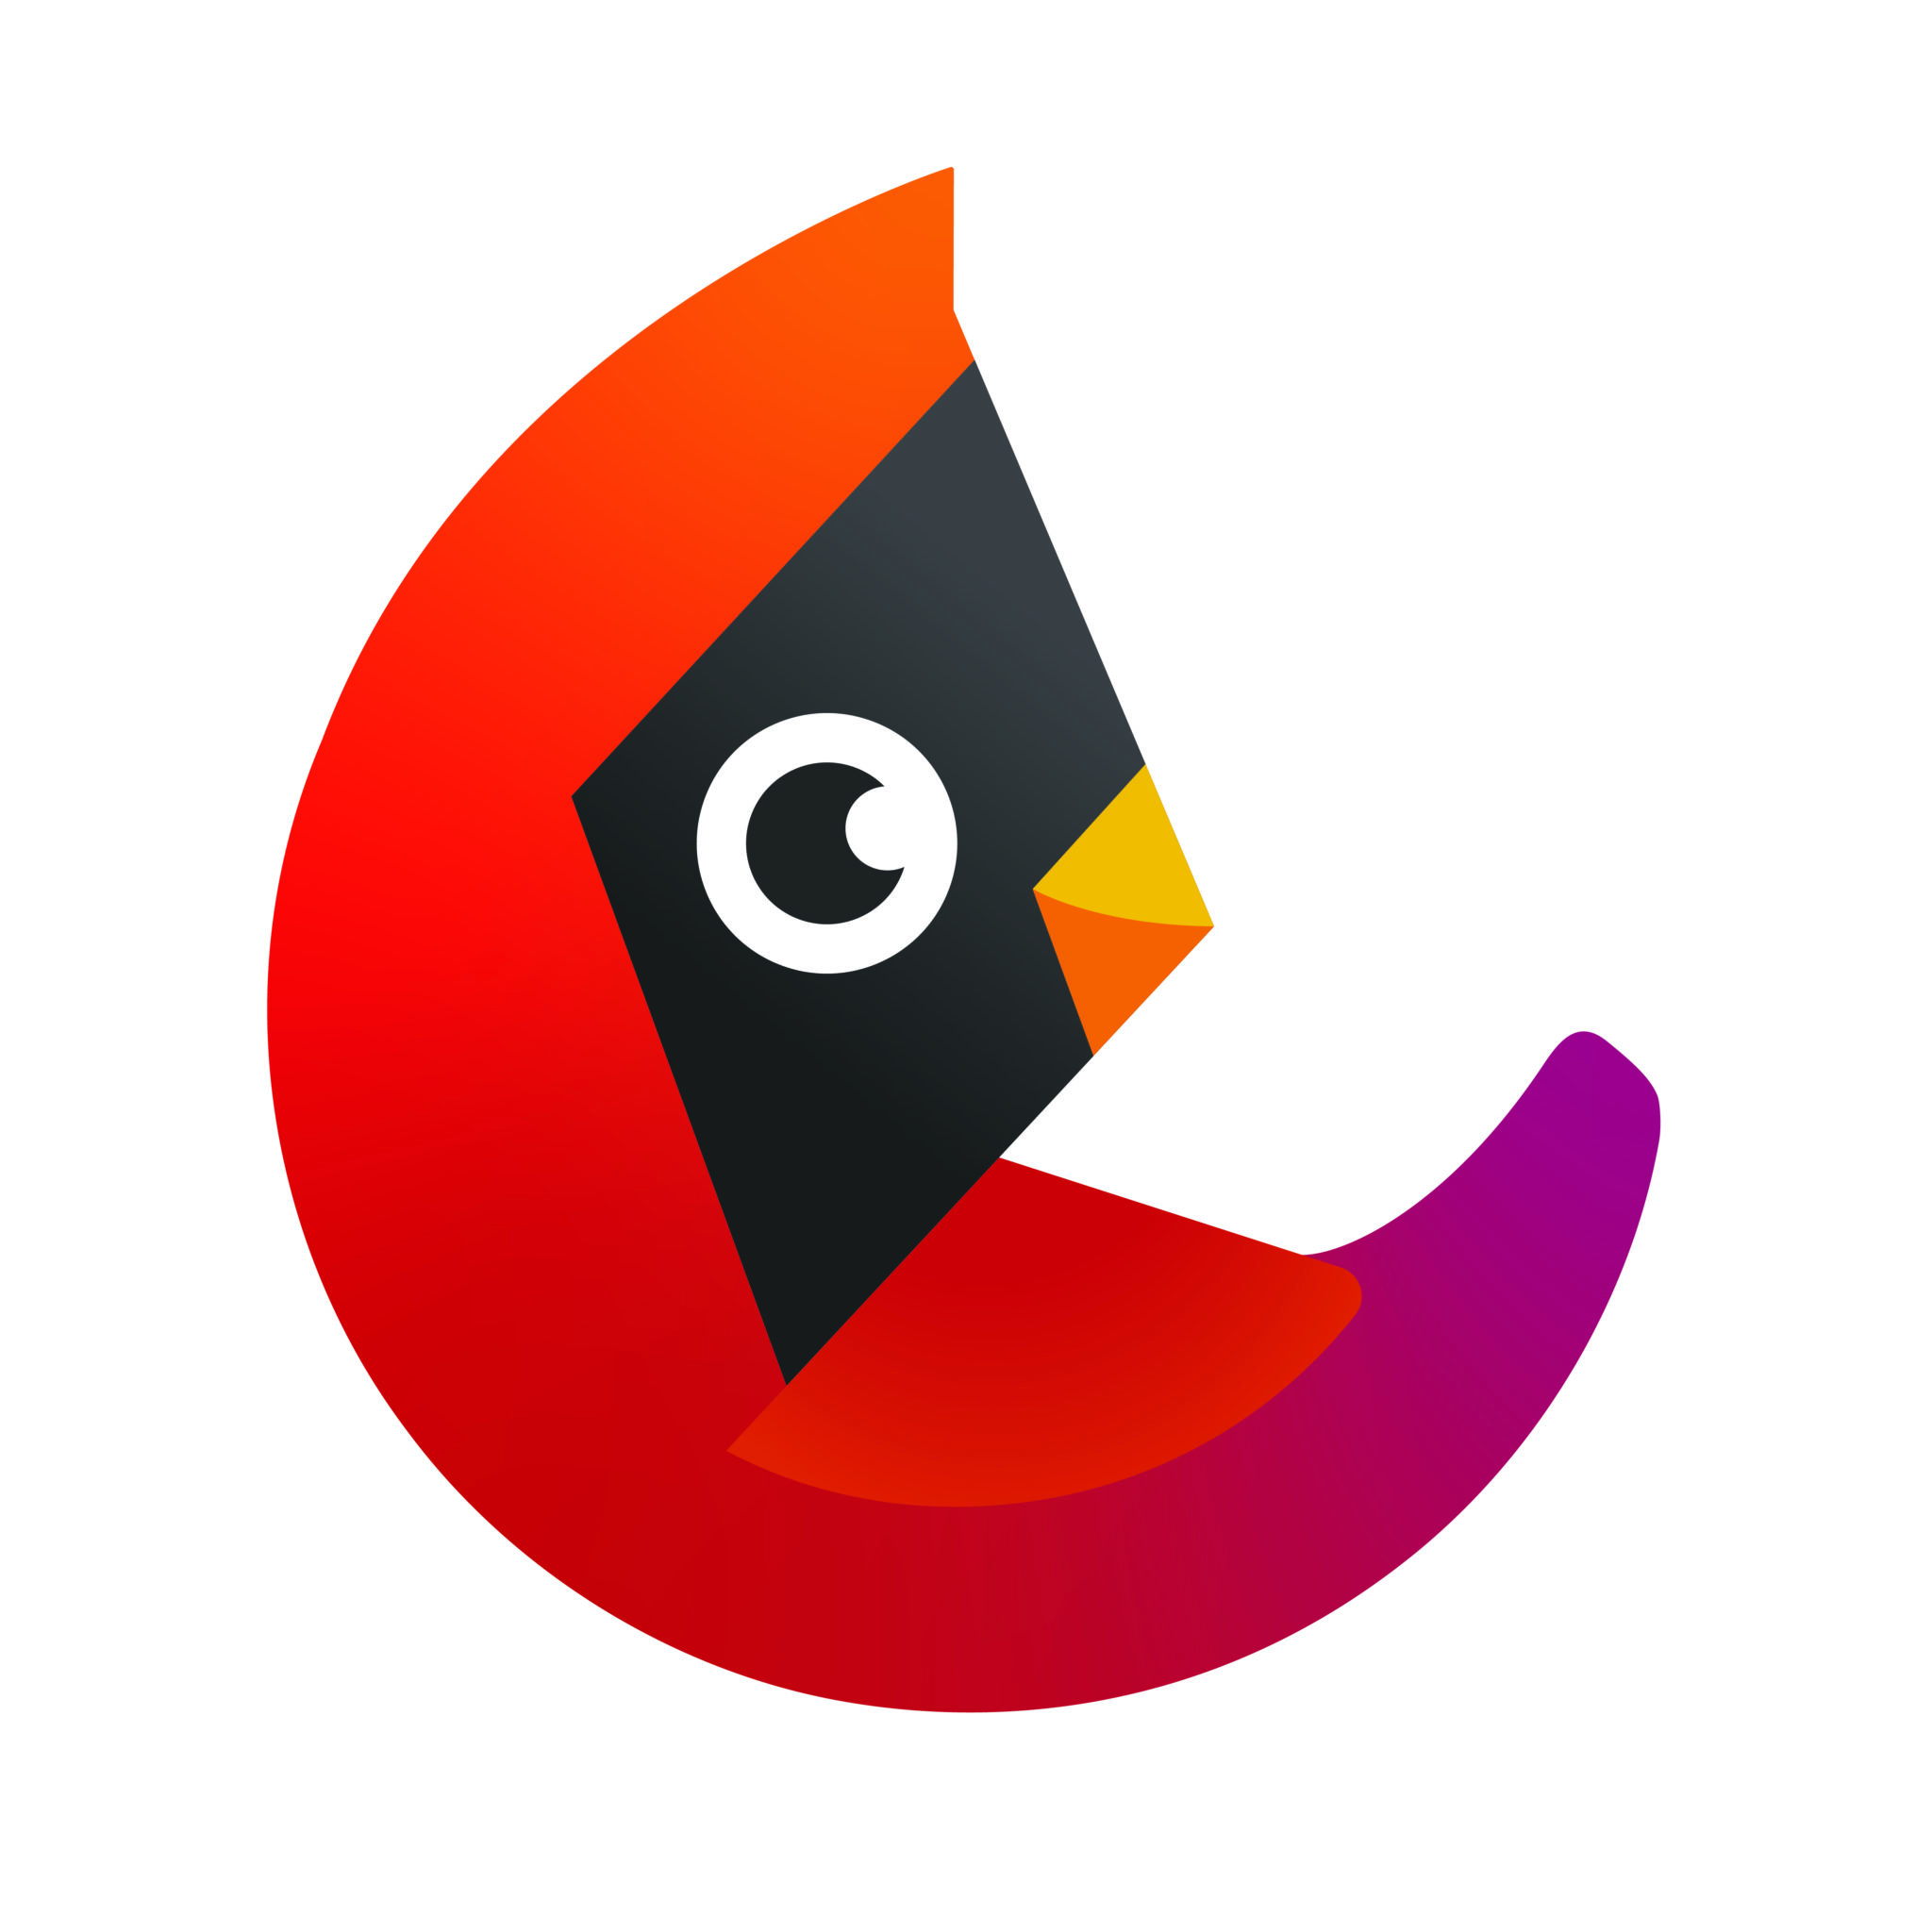 Cardinal Learning Hub educational show branding icon, created by Šek Design Studio